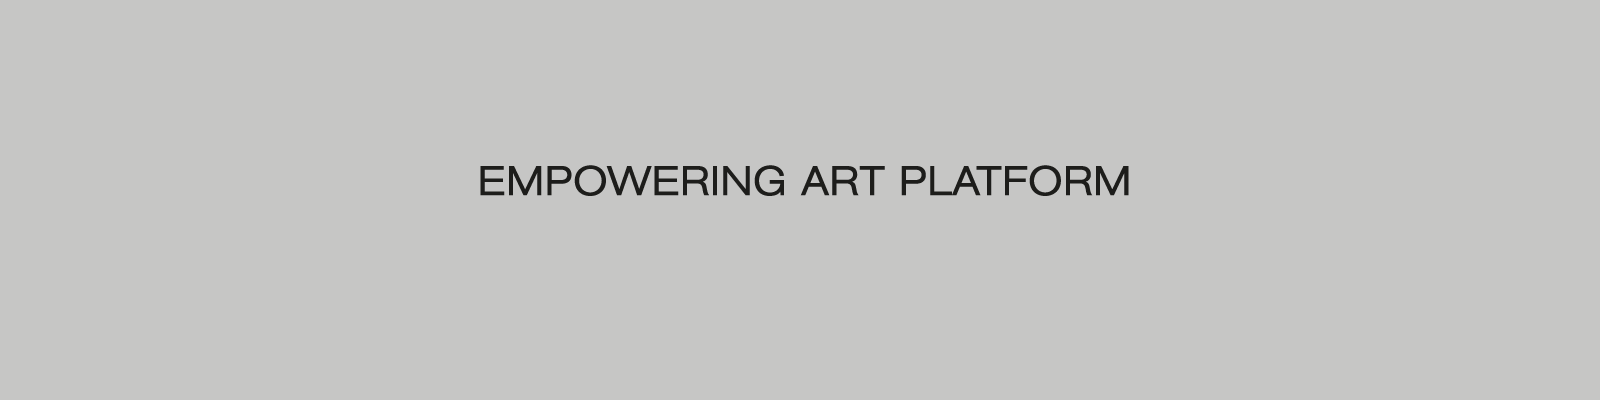 WEM - Empowering Art Platform